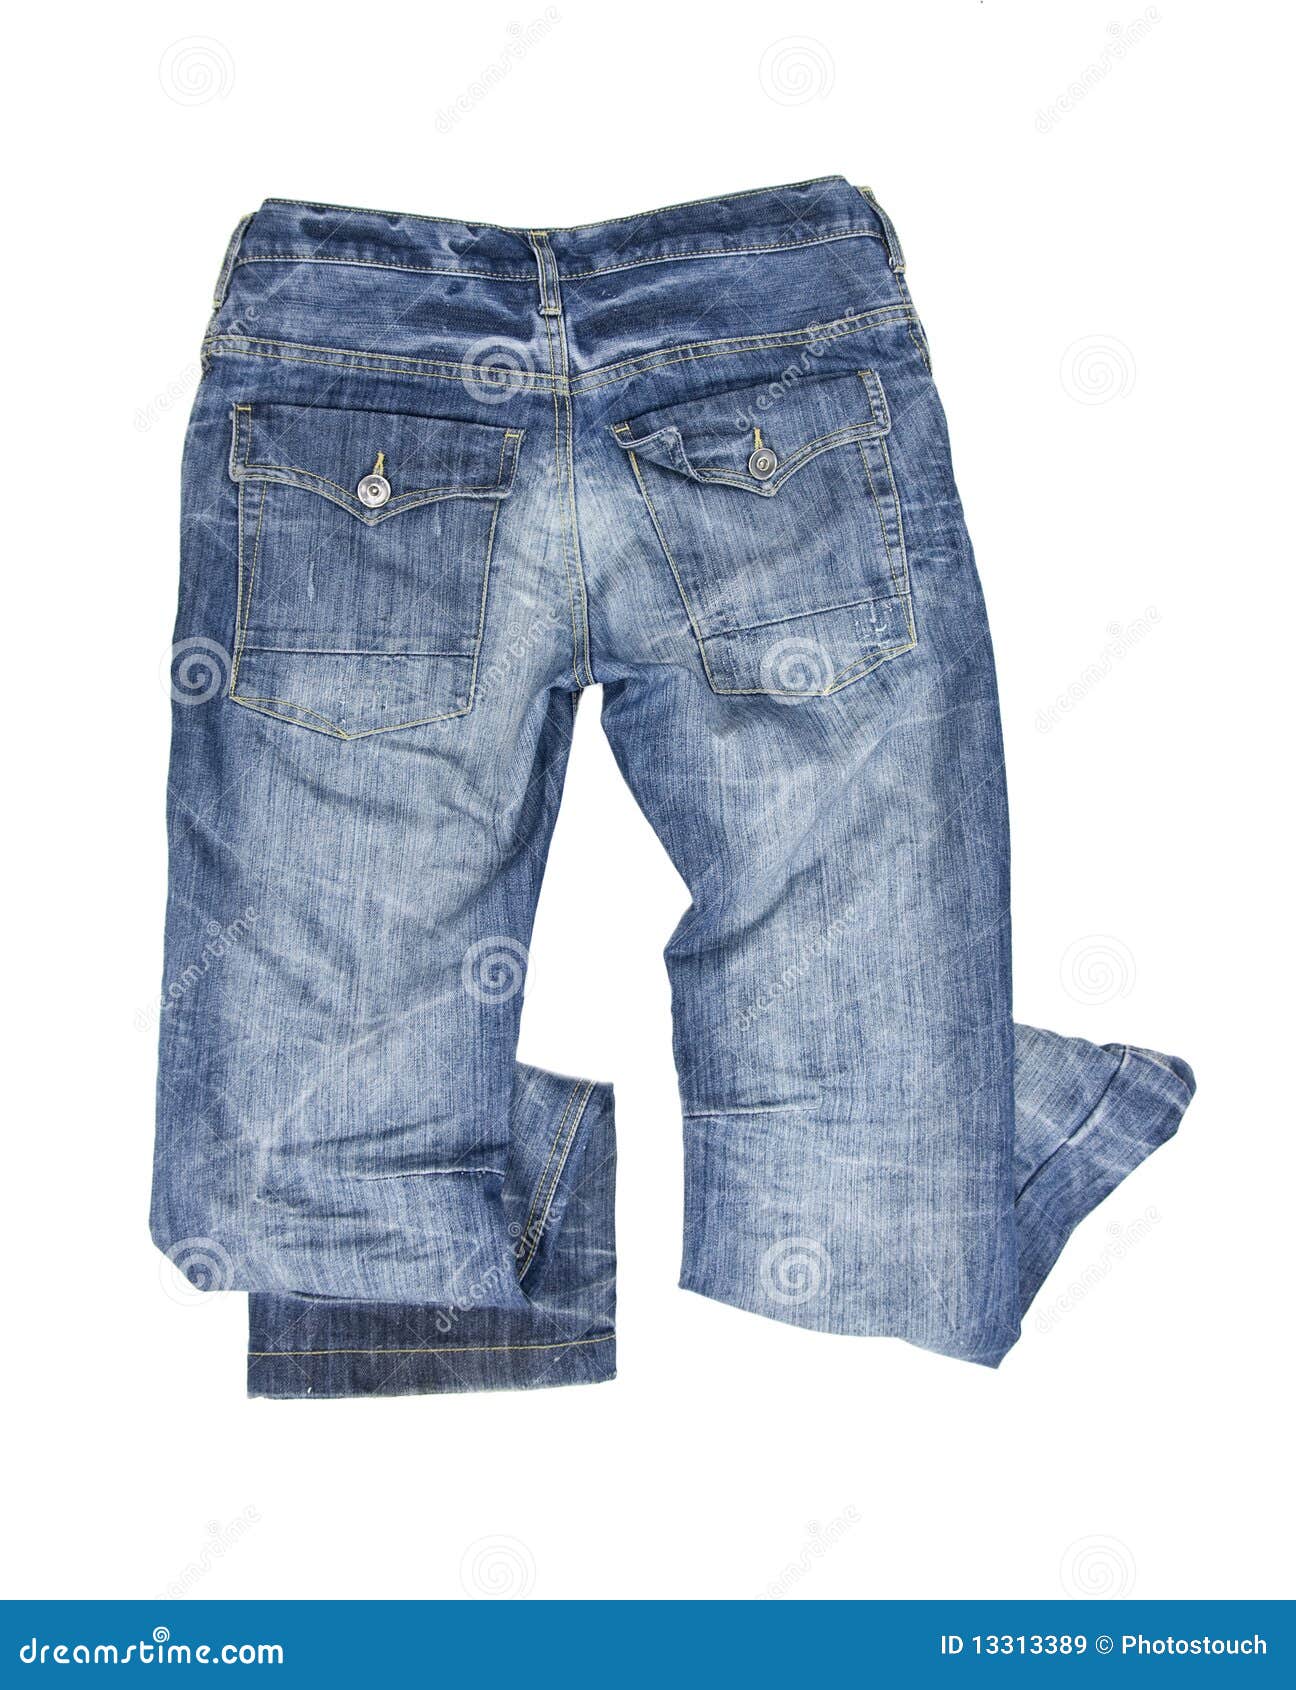 Blue jeans trousers stock image. Image of fibre, garment - 13313389